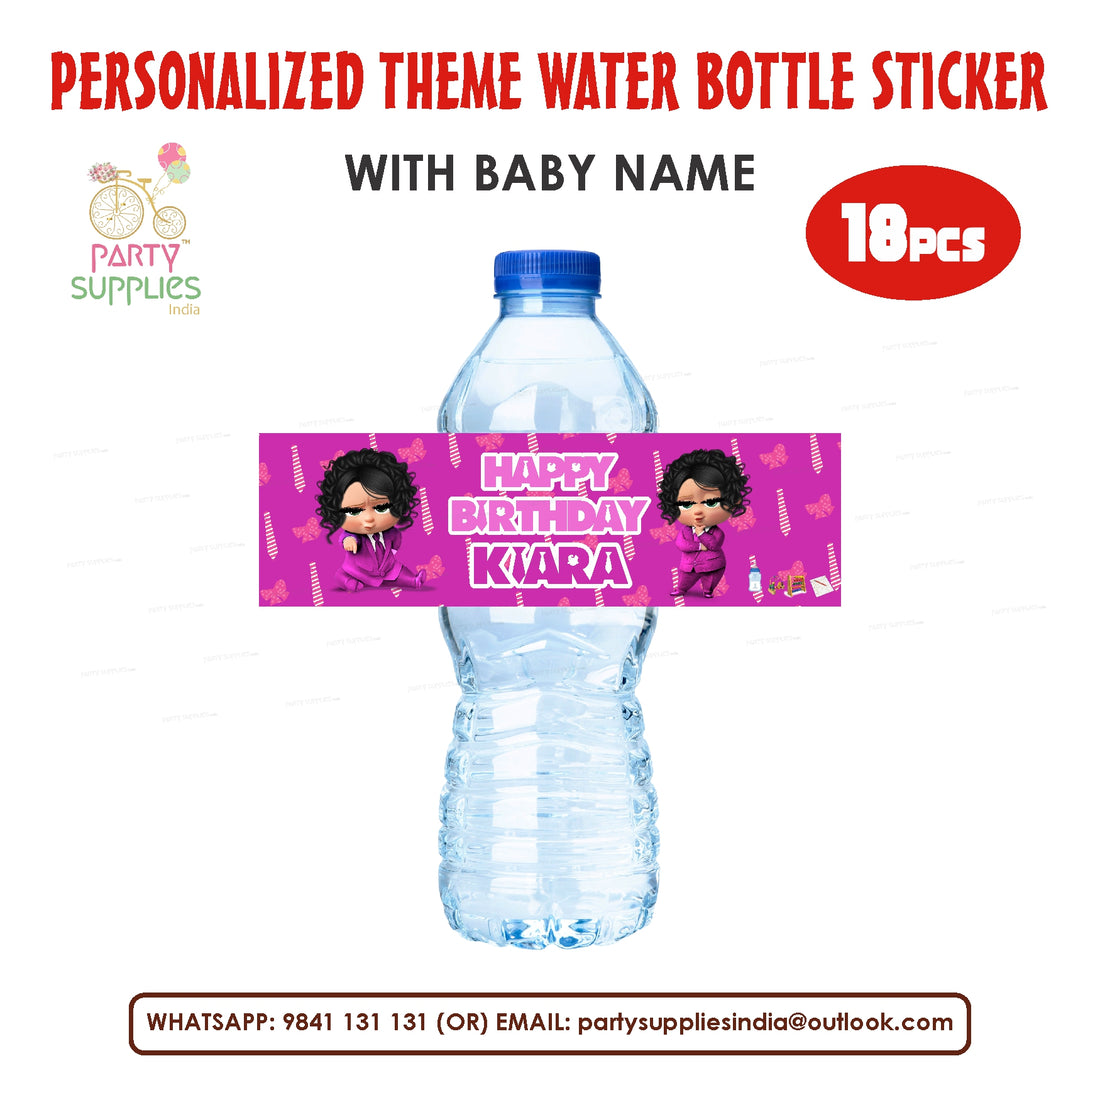 PSI Girl Boss Baby Theme Water Bottle Sticker